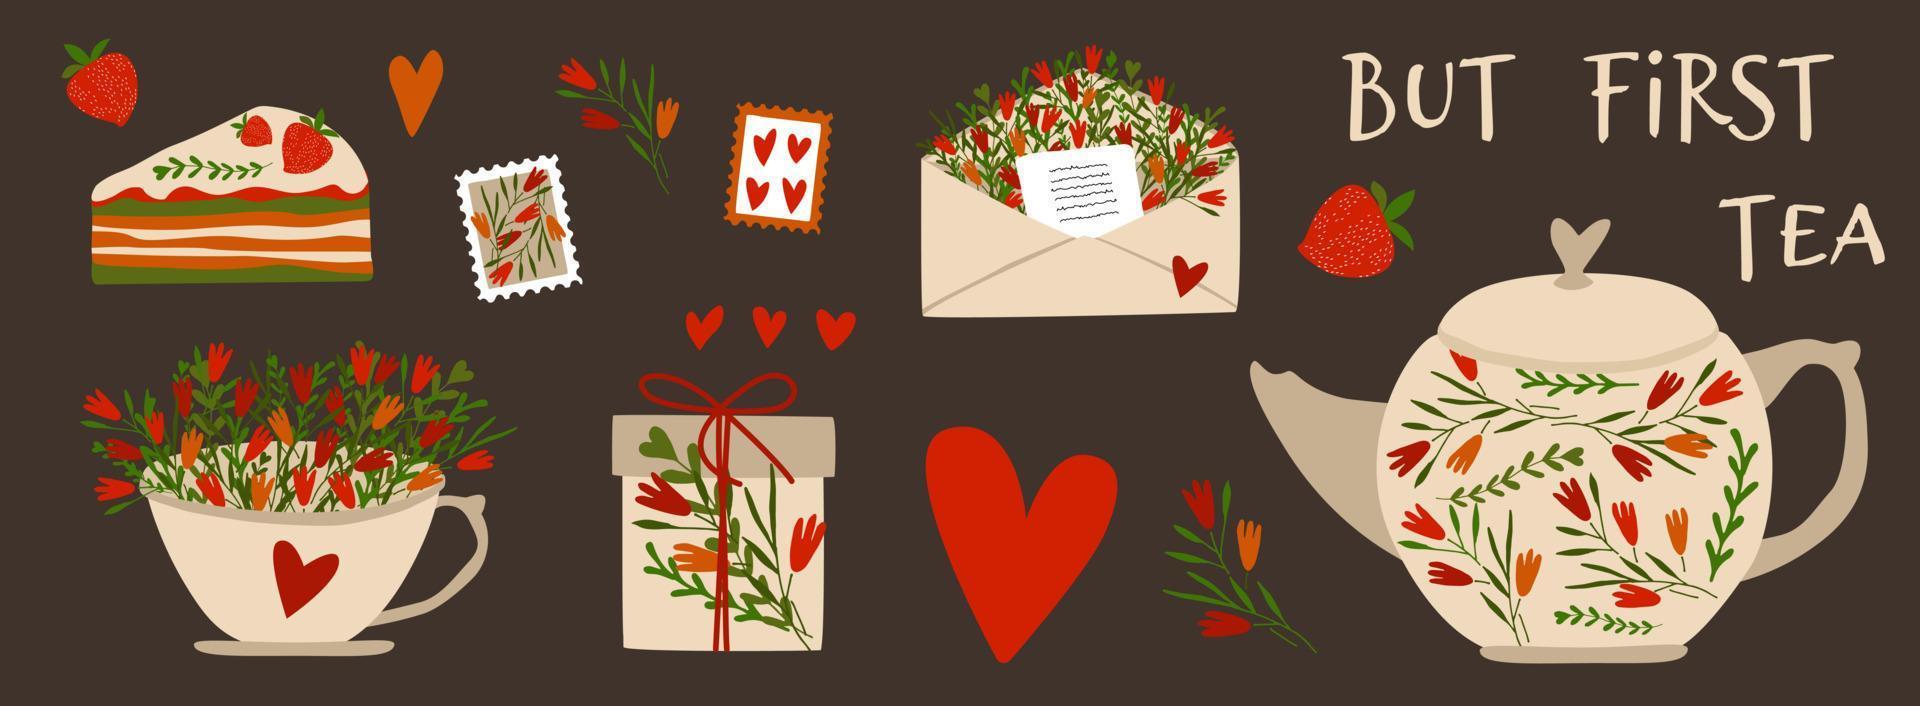 té de hierbas, taza y tetera. carta con flores, sello postal, regalo, pastel de fresa. set de regalo pero primer té. ilustración vectorial aislada. vector